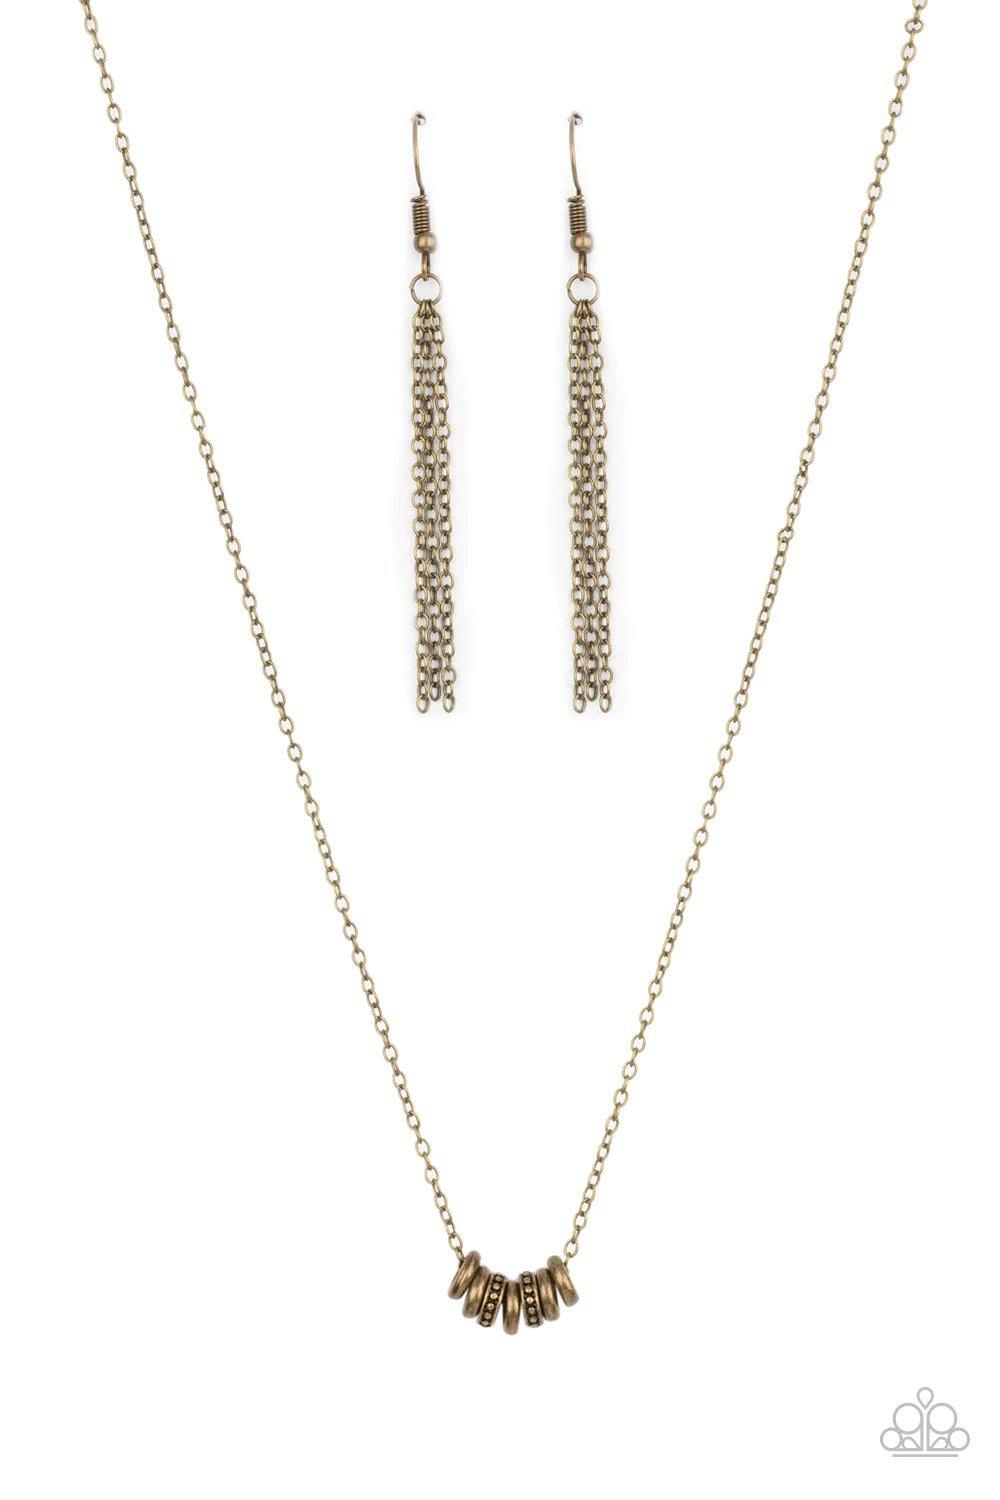 Dainty Dalliance Brass Necklace - Paparazzi Accessories- lightbox - CarasShop.com - $5 Jewelry by Cara Jewels